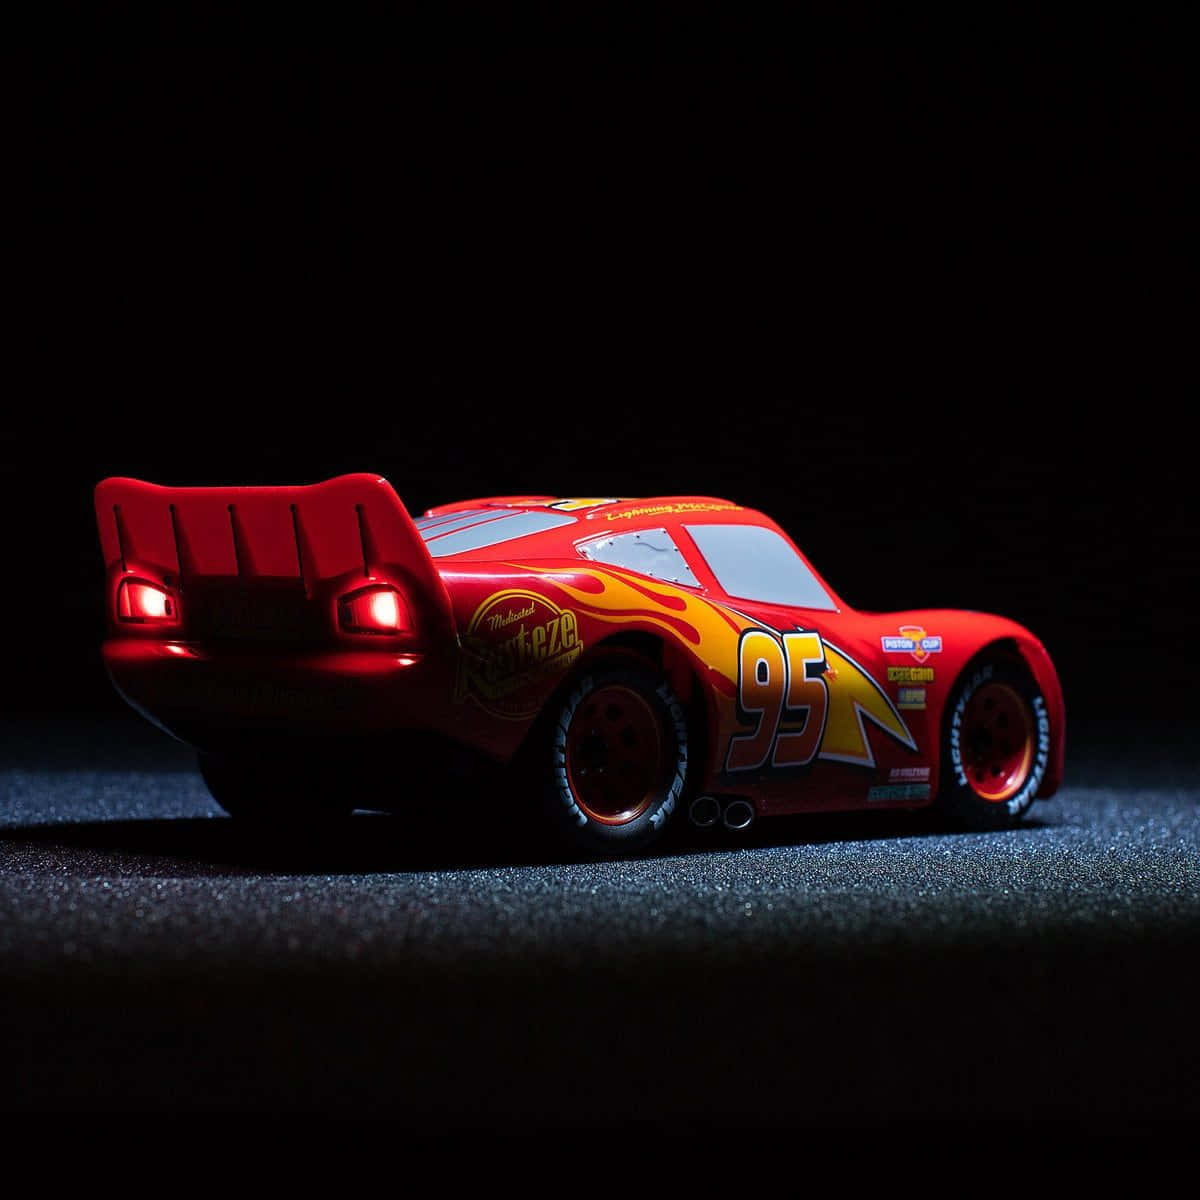 Lightning McQueen Racing to Glory